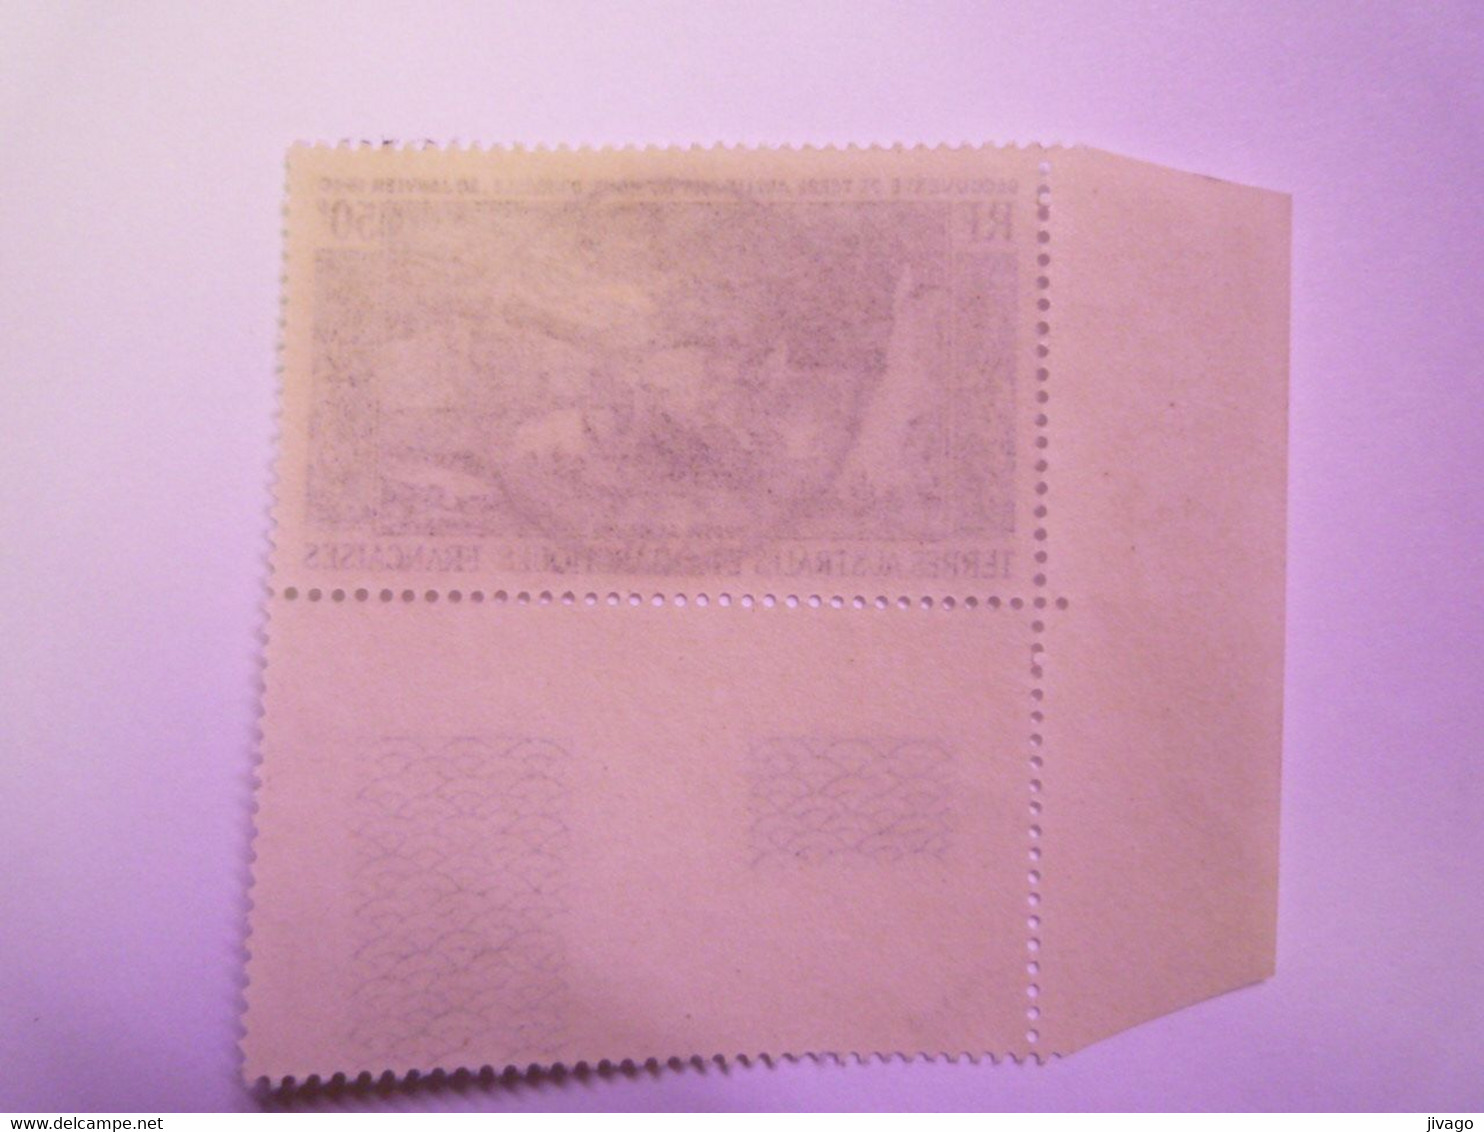 2020 - 8768  T.A.A.F  POSTE Aérienne N° 8  (cote 120 Euros)   XXX - Used Stamps